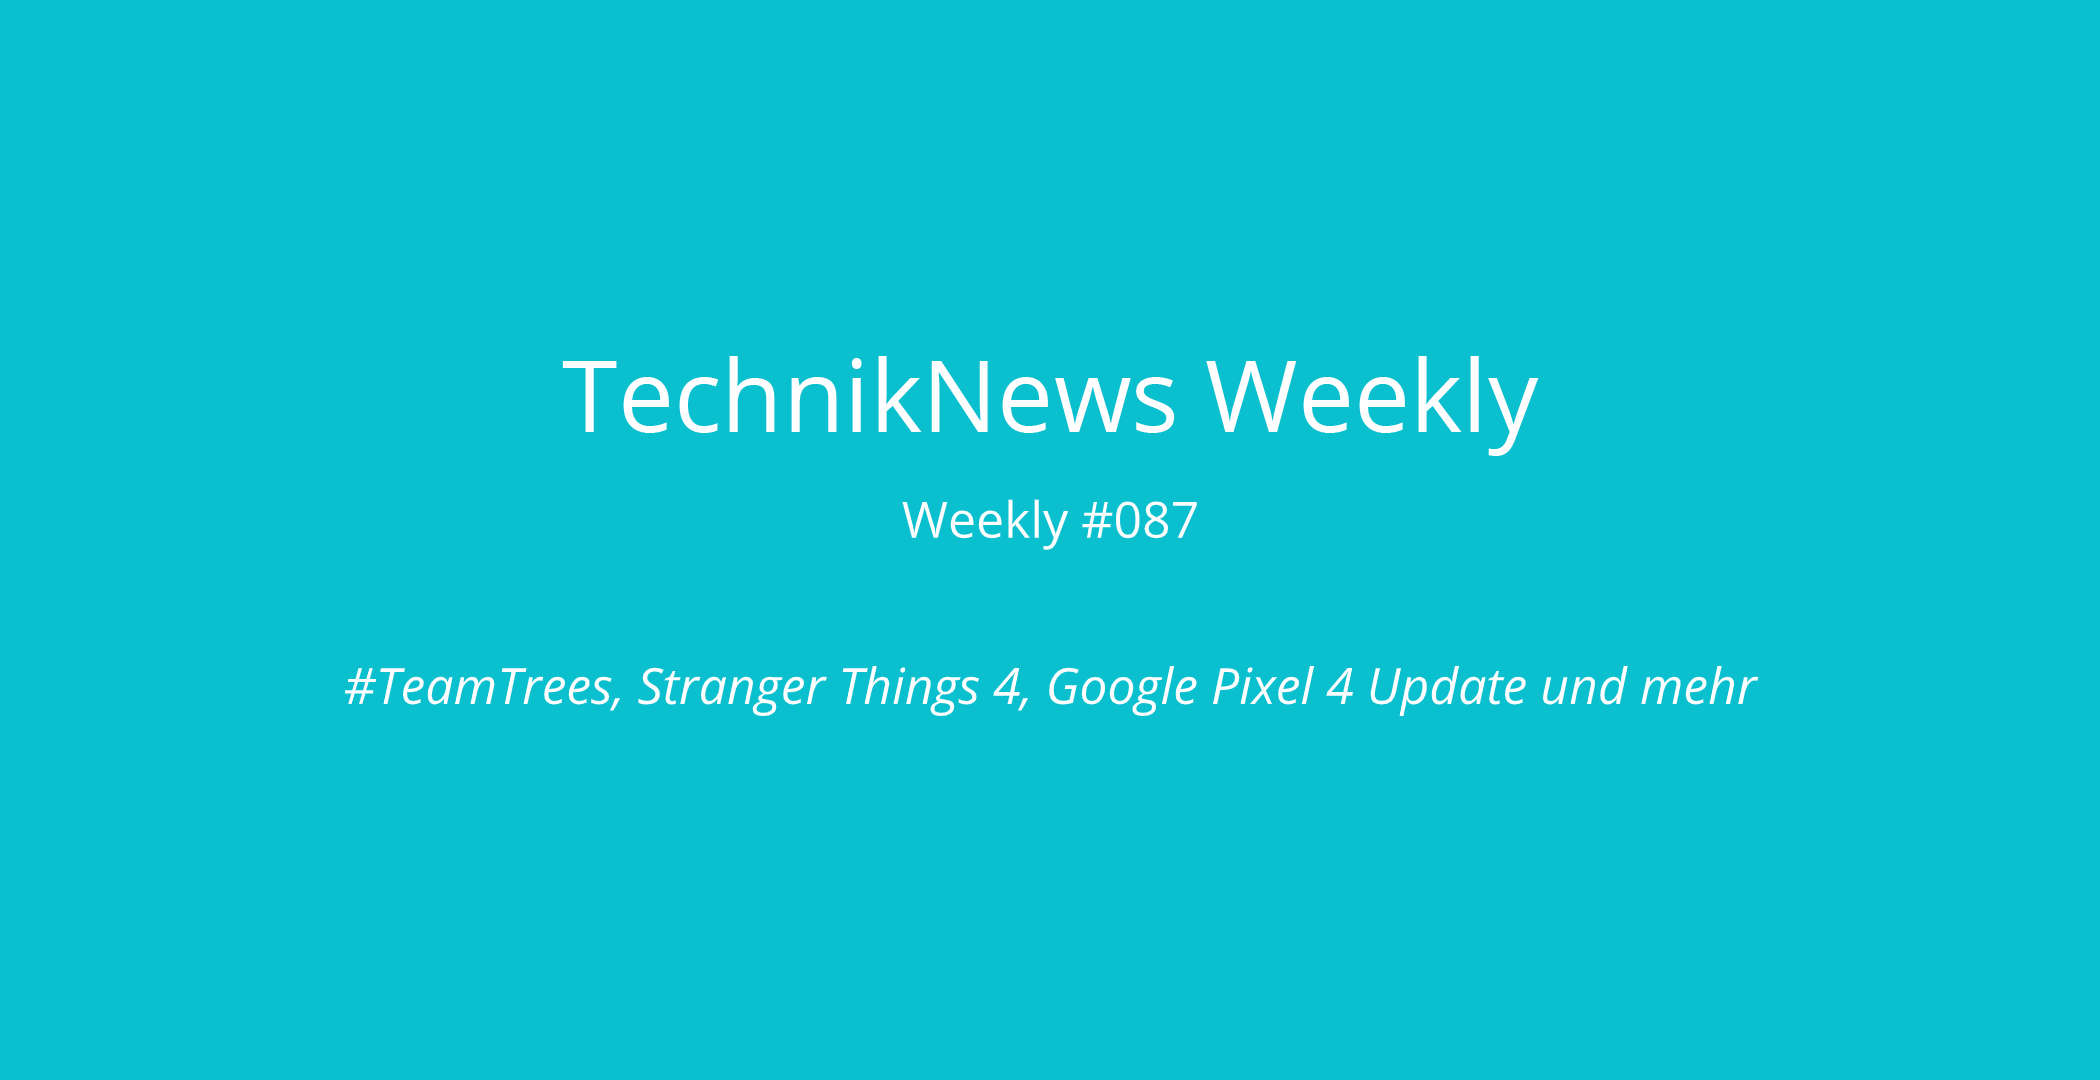 TechnikNews Weekly #087